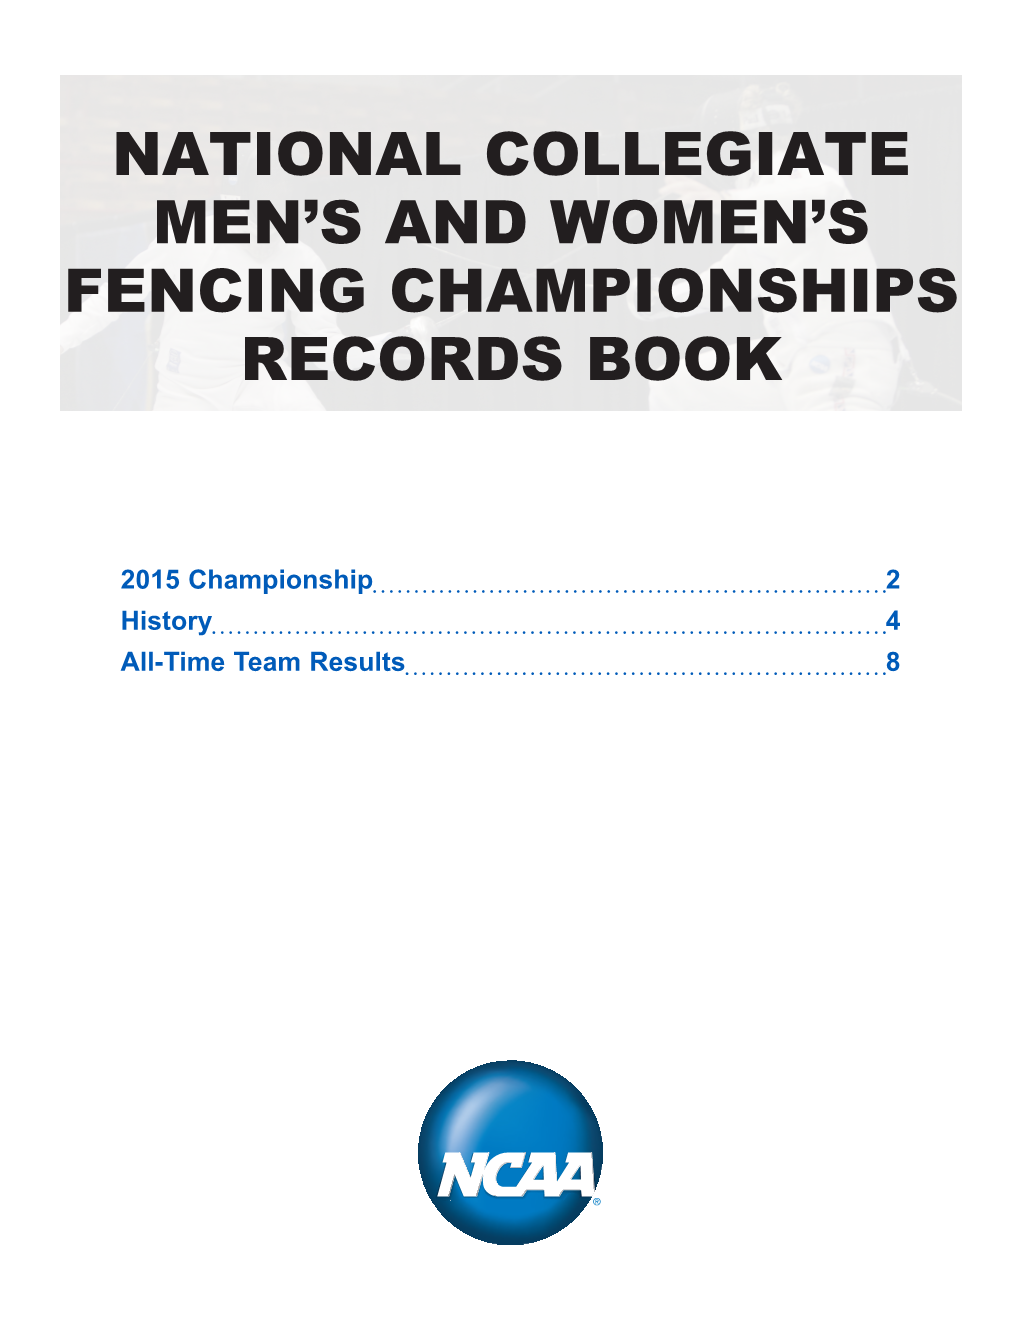 National Collegiate Men's and Women's Fencing